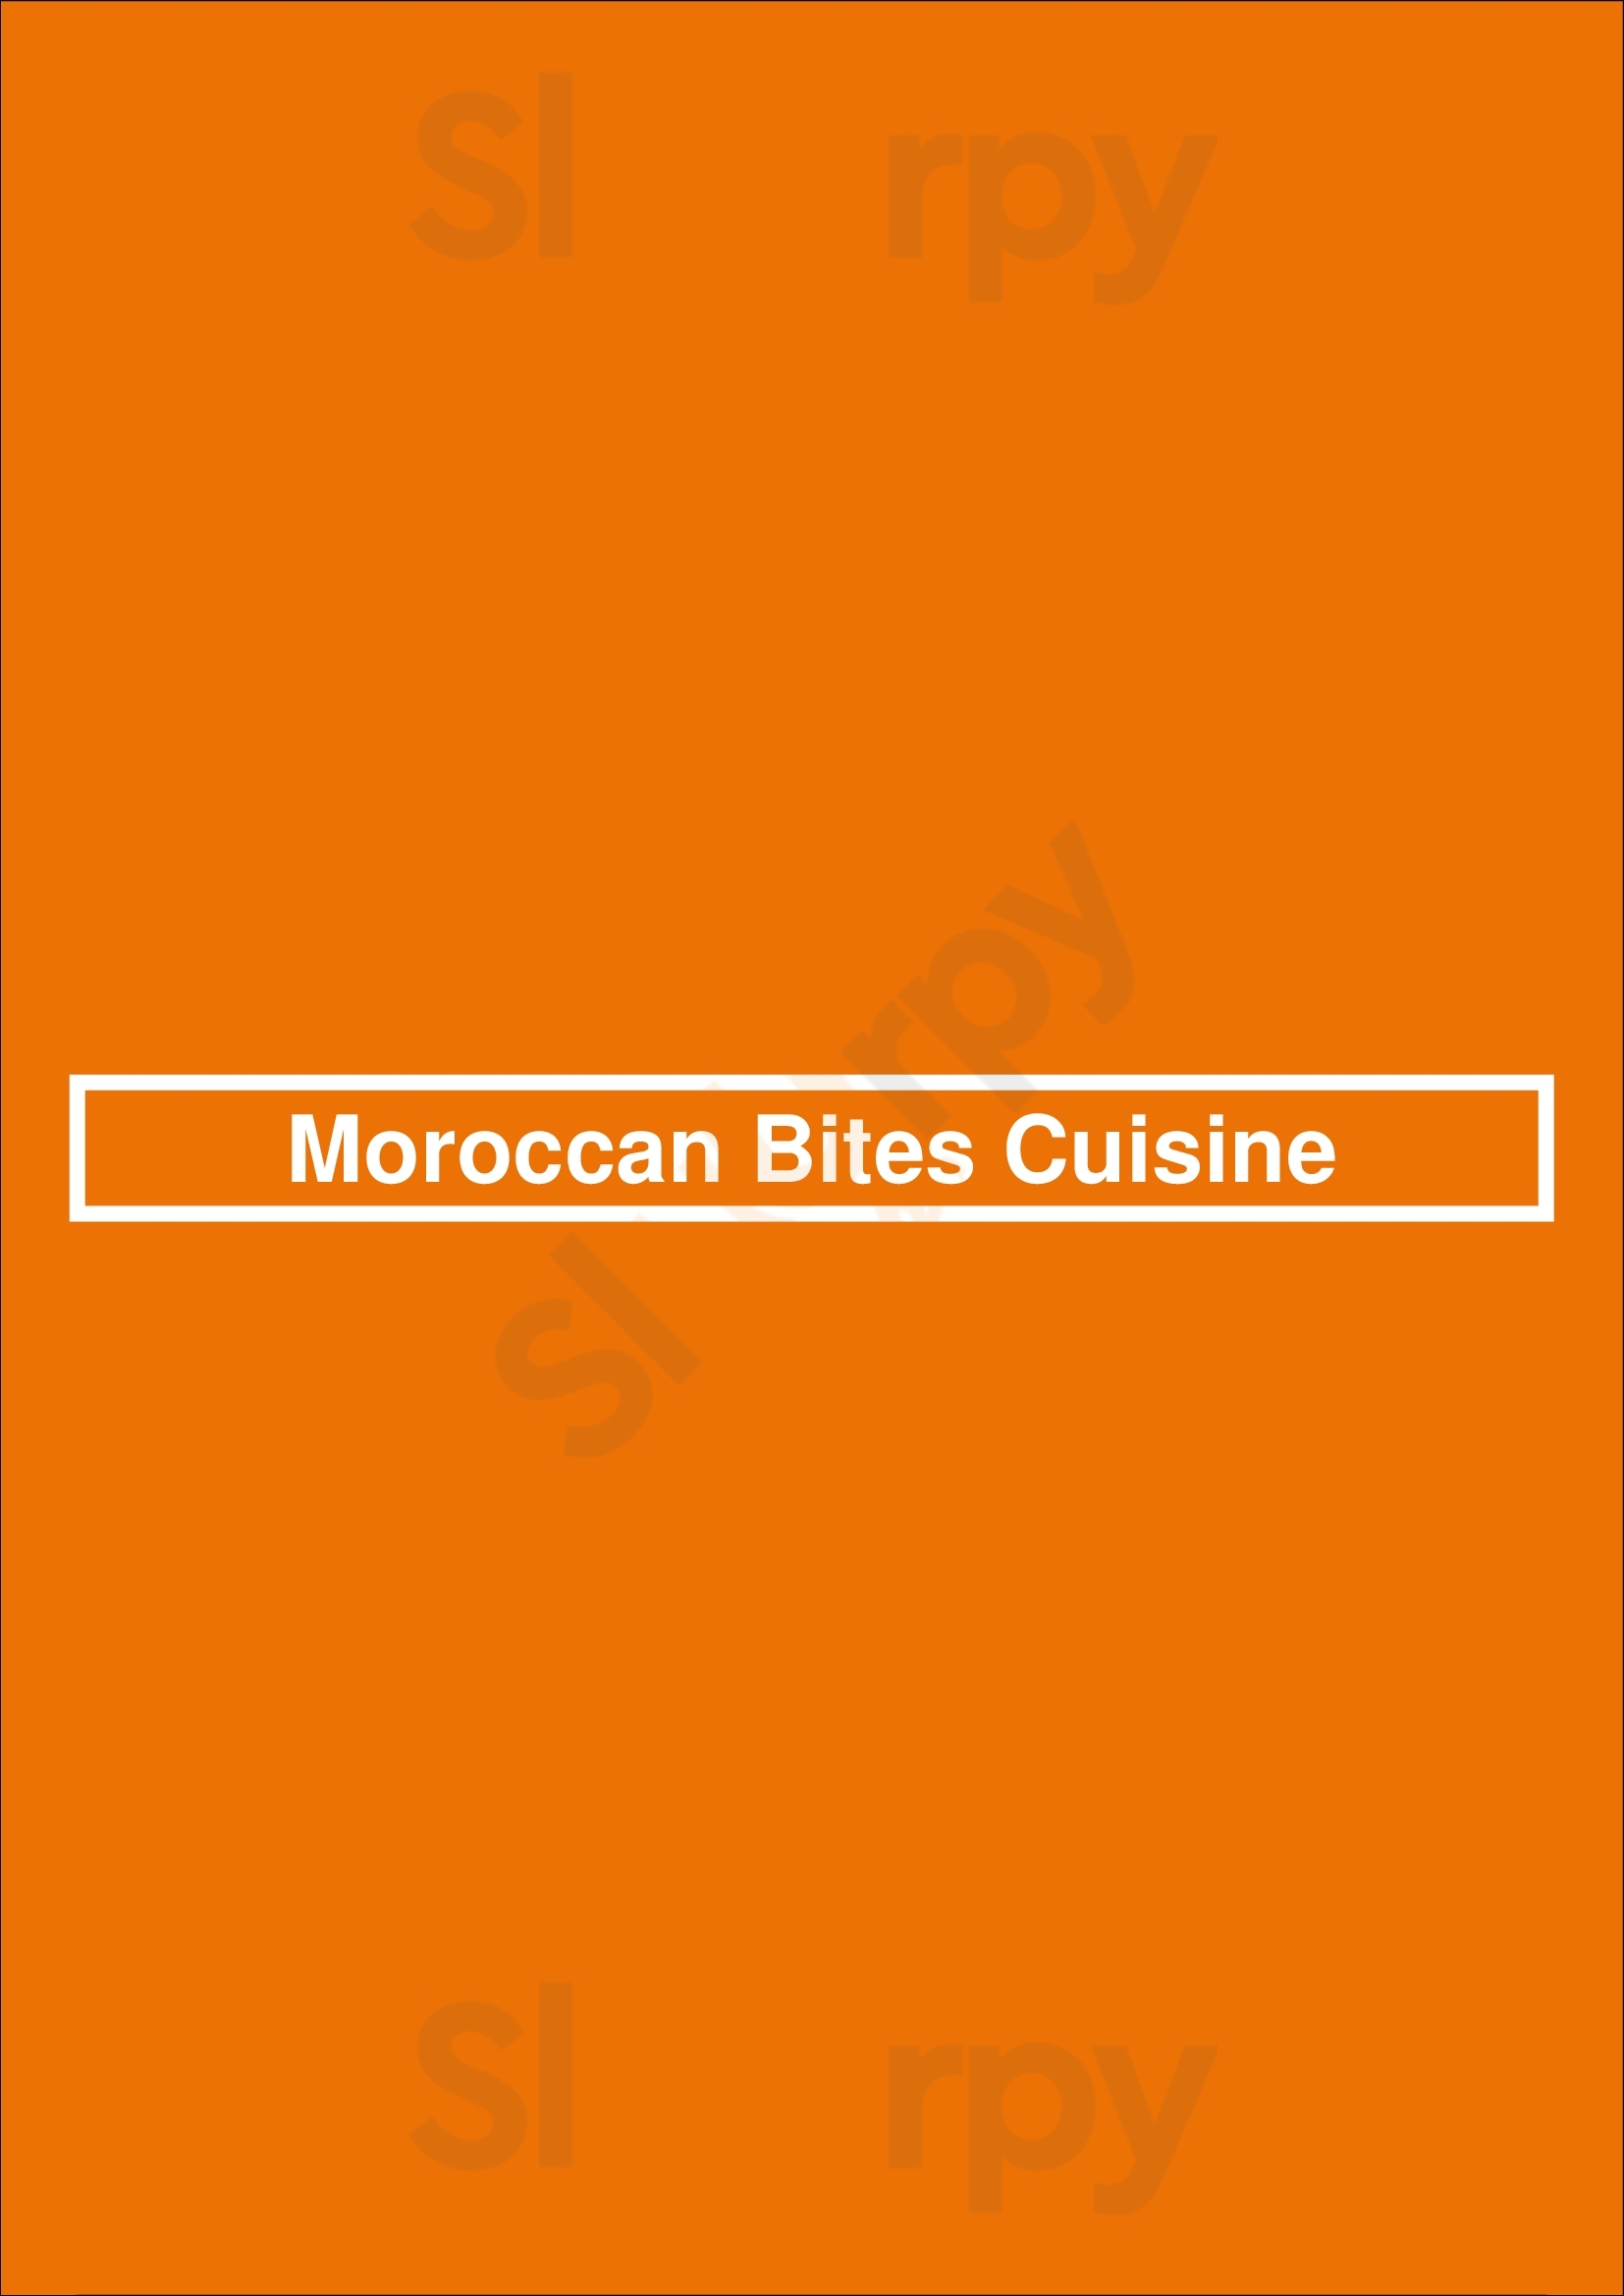 Moroccan Bites San Antonio Menu - 1